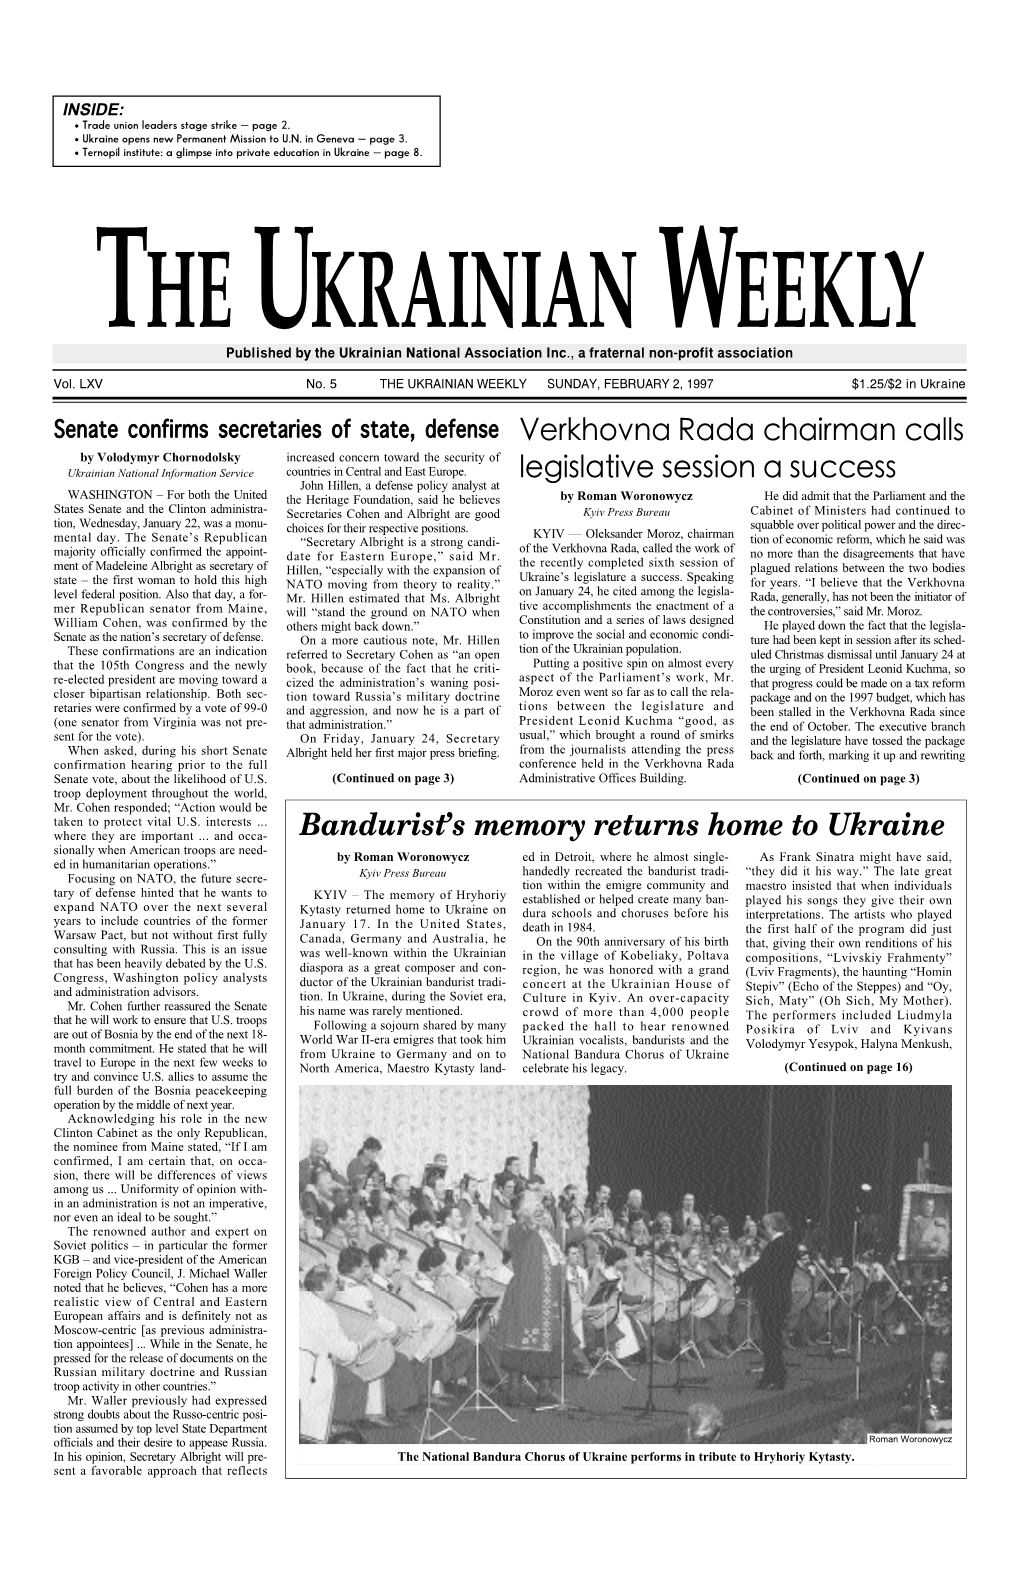 The Ukrainian Weekly 1997, No.5